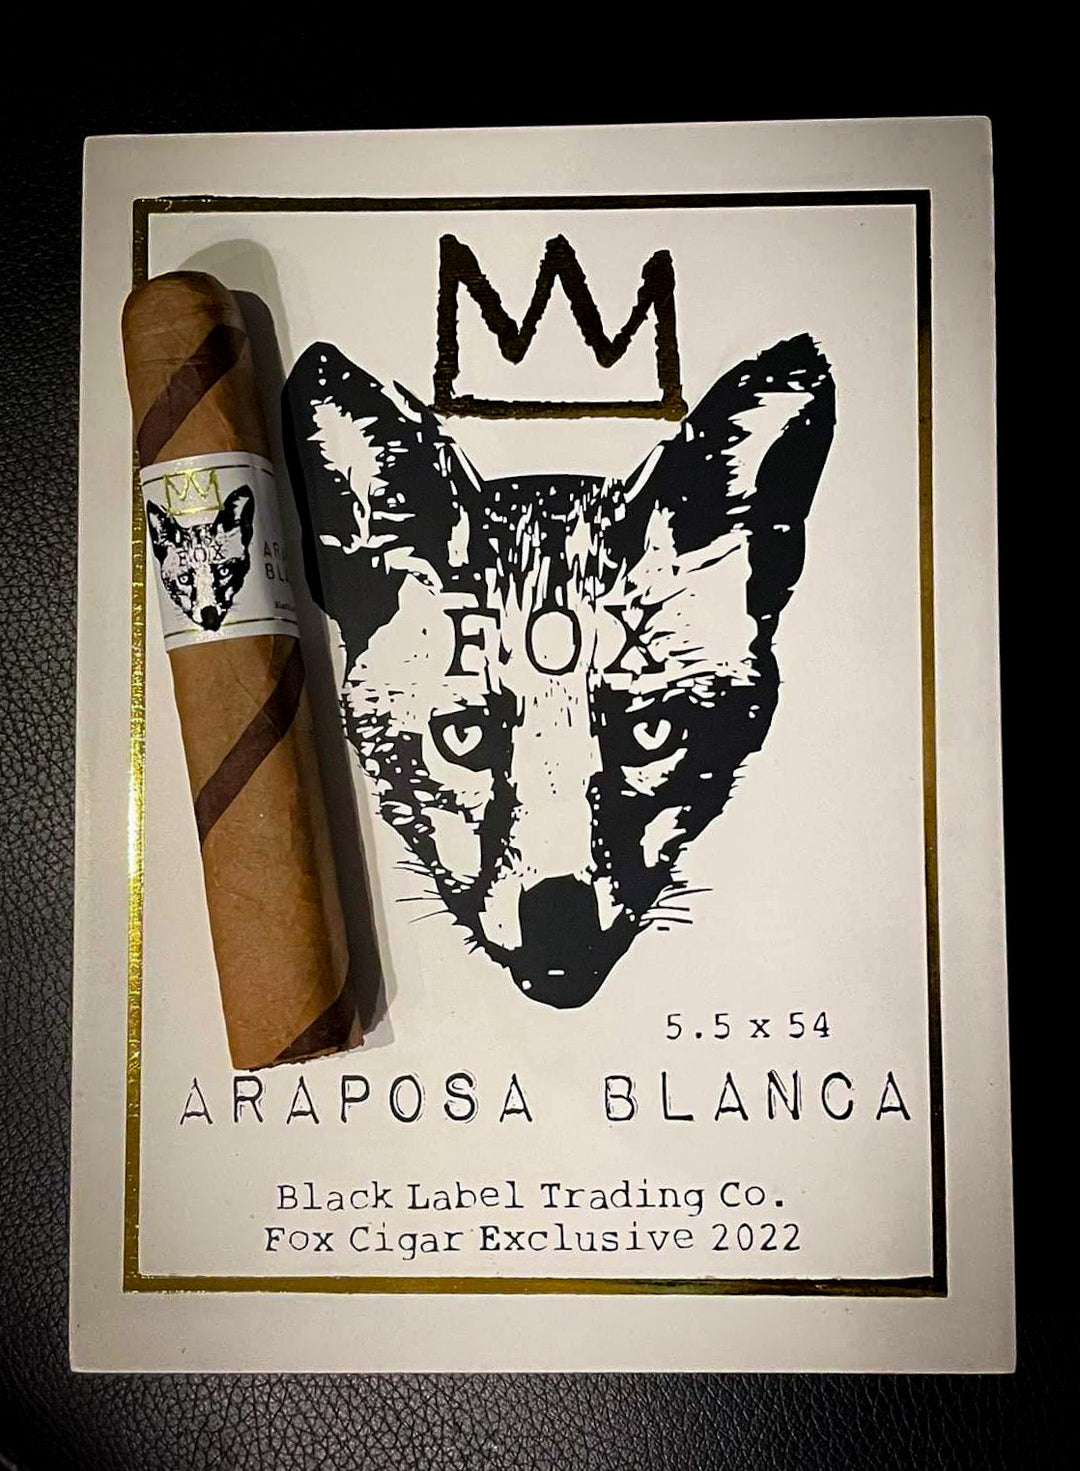 Black Label Trading Company Announces Release of ARAPOSA BLANCA as Fox Cigar Exclusive